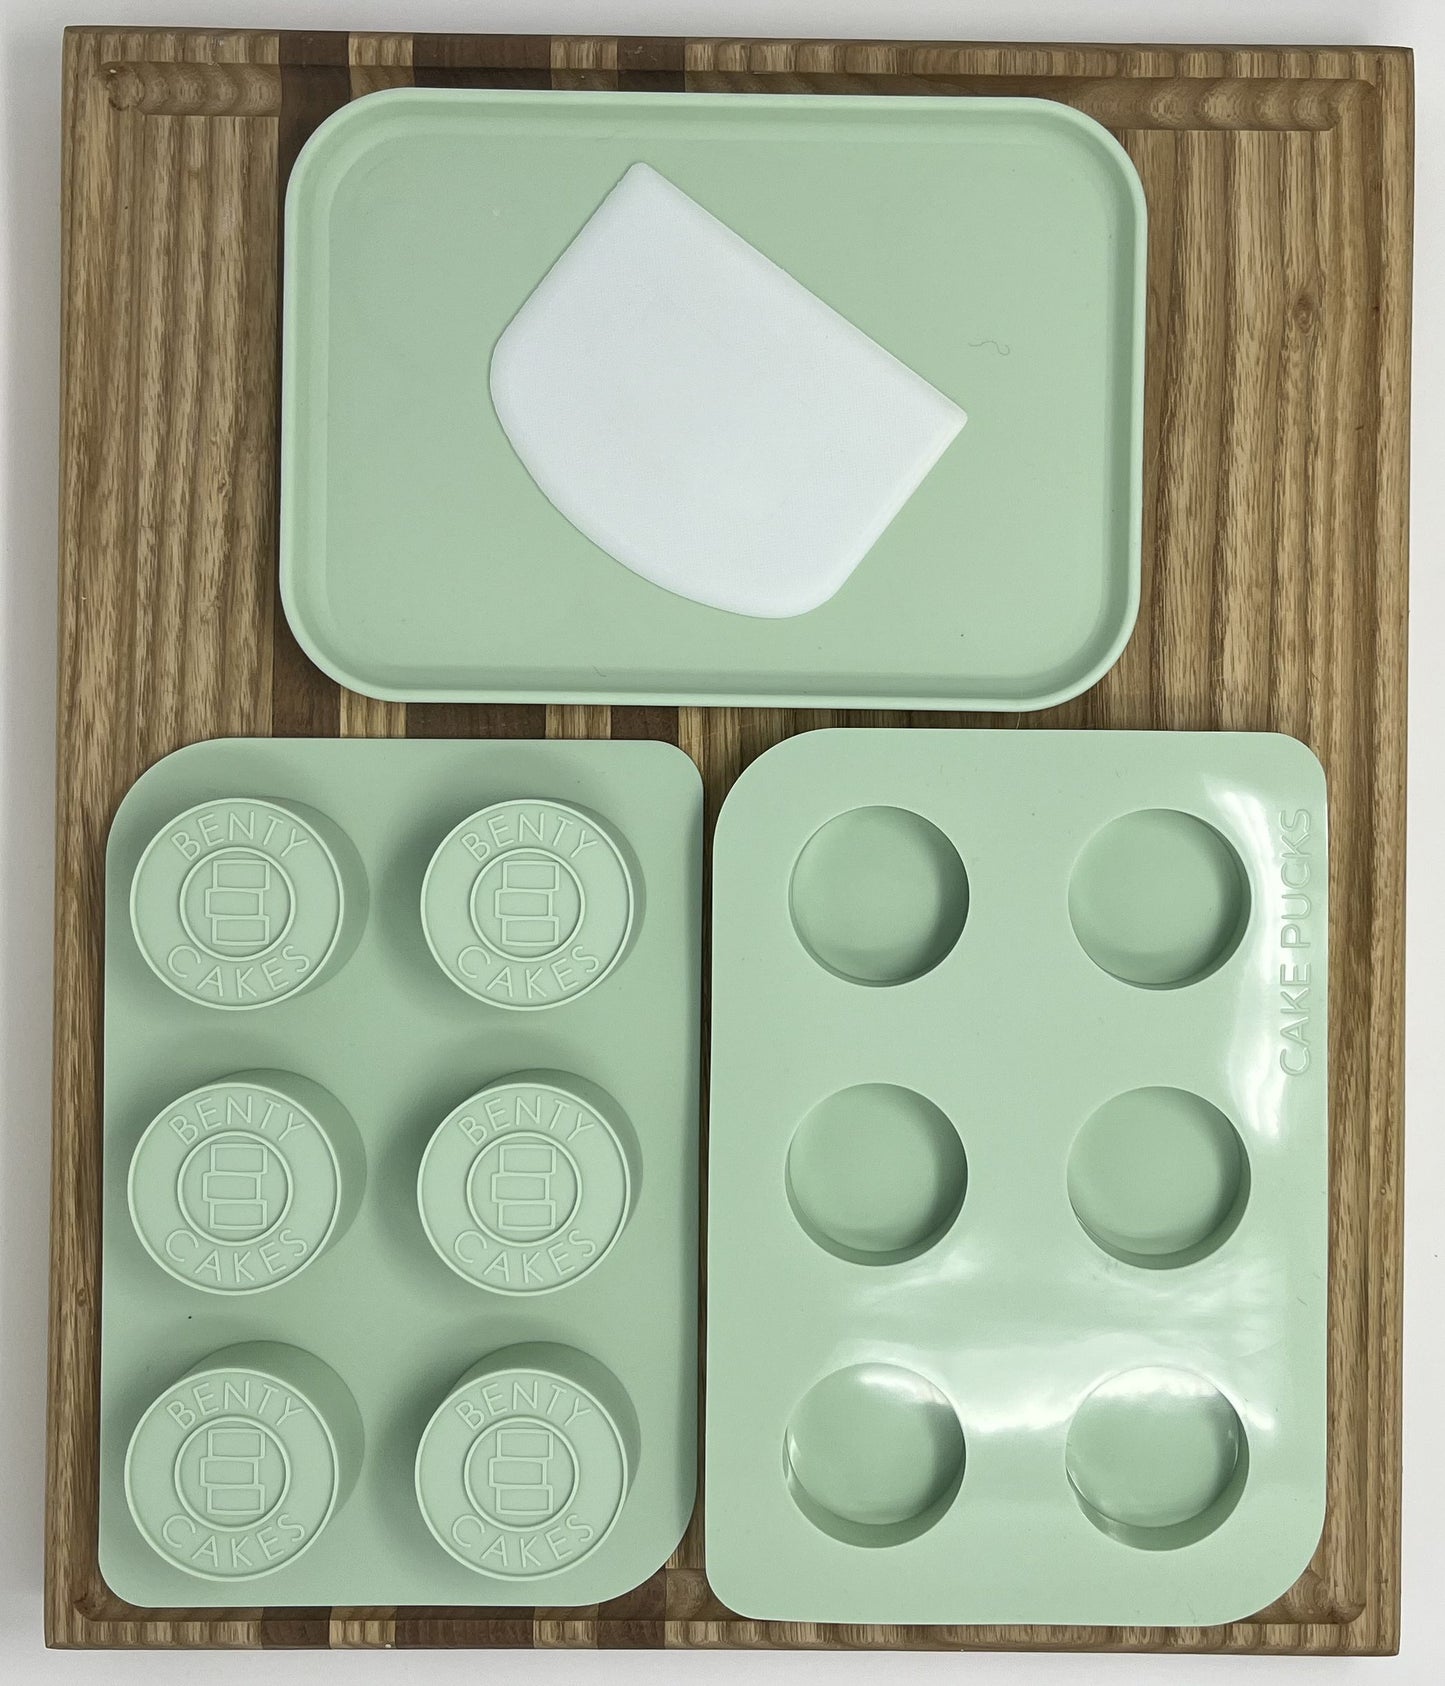 GREEN - Original CakePuck Mold Set